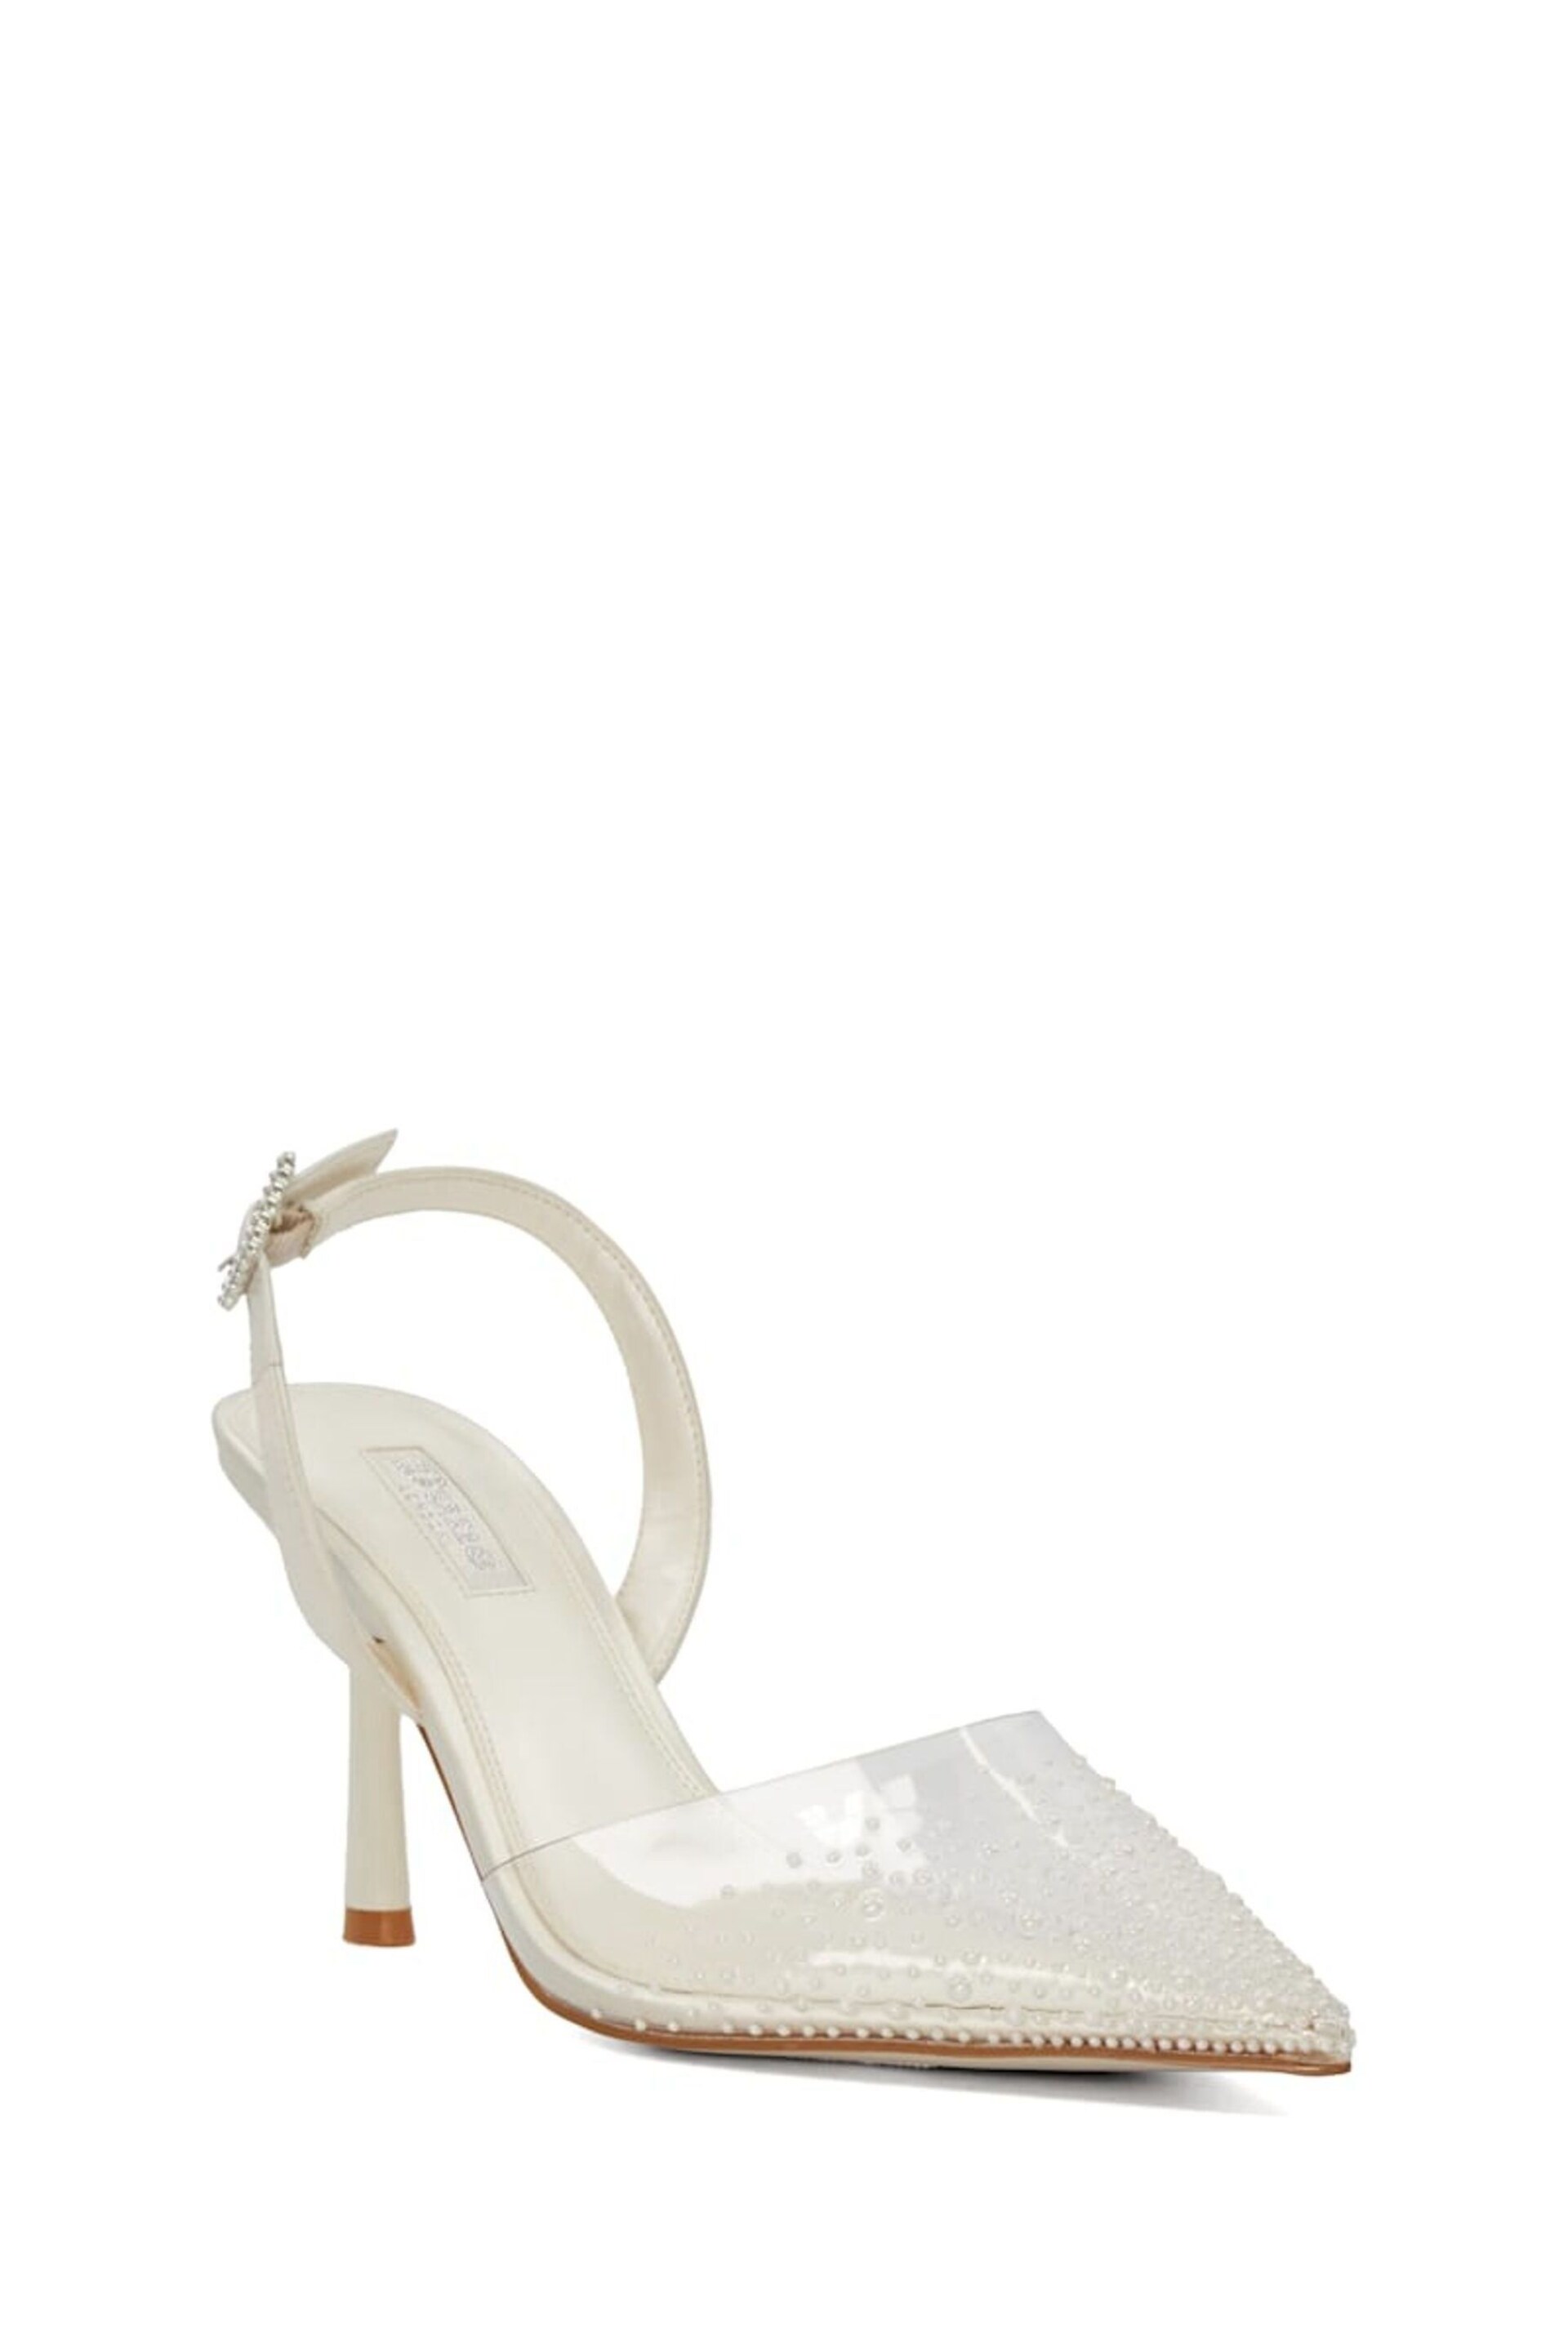 Dune London Cream Divinely Sea Pearl Bridal Slingback Heels - Image 3 of 6